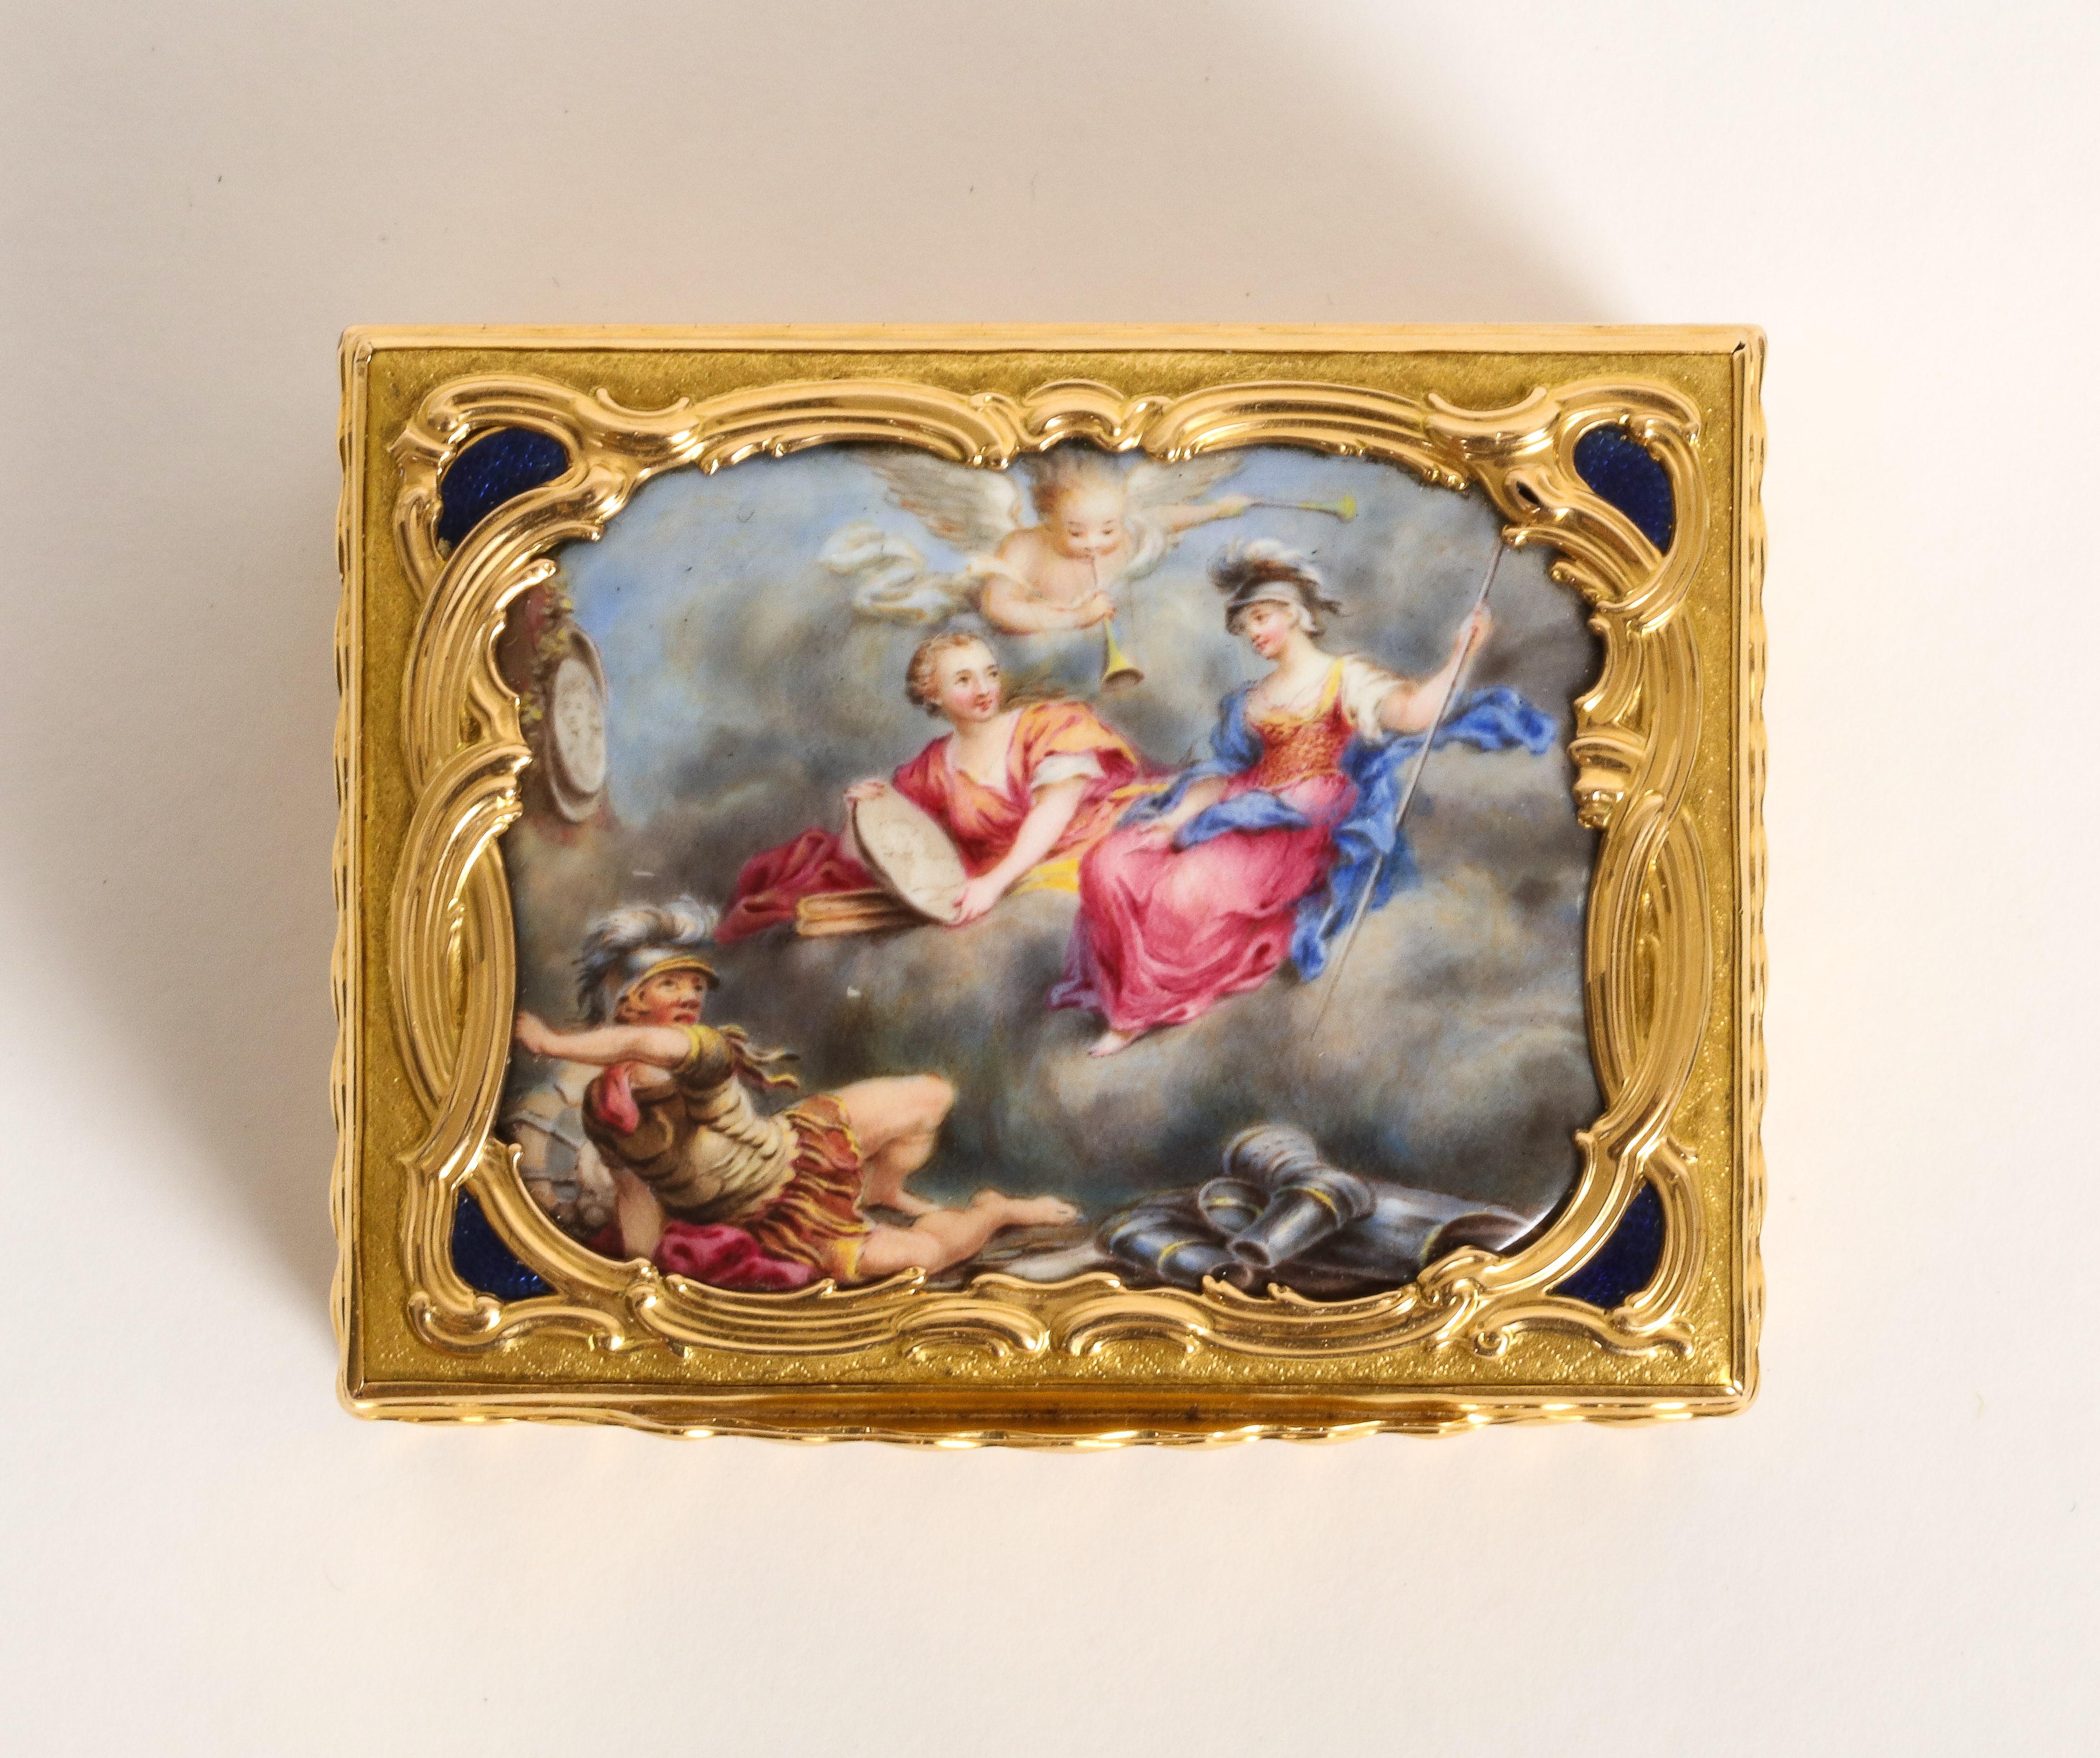 Gold & enamel snuff box

Circa 19th century, European

Dimensions: 2.50 x 1.94 inches

Weight: 119.8 grams.

